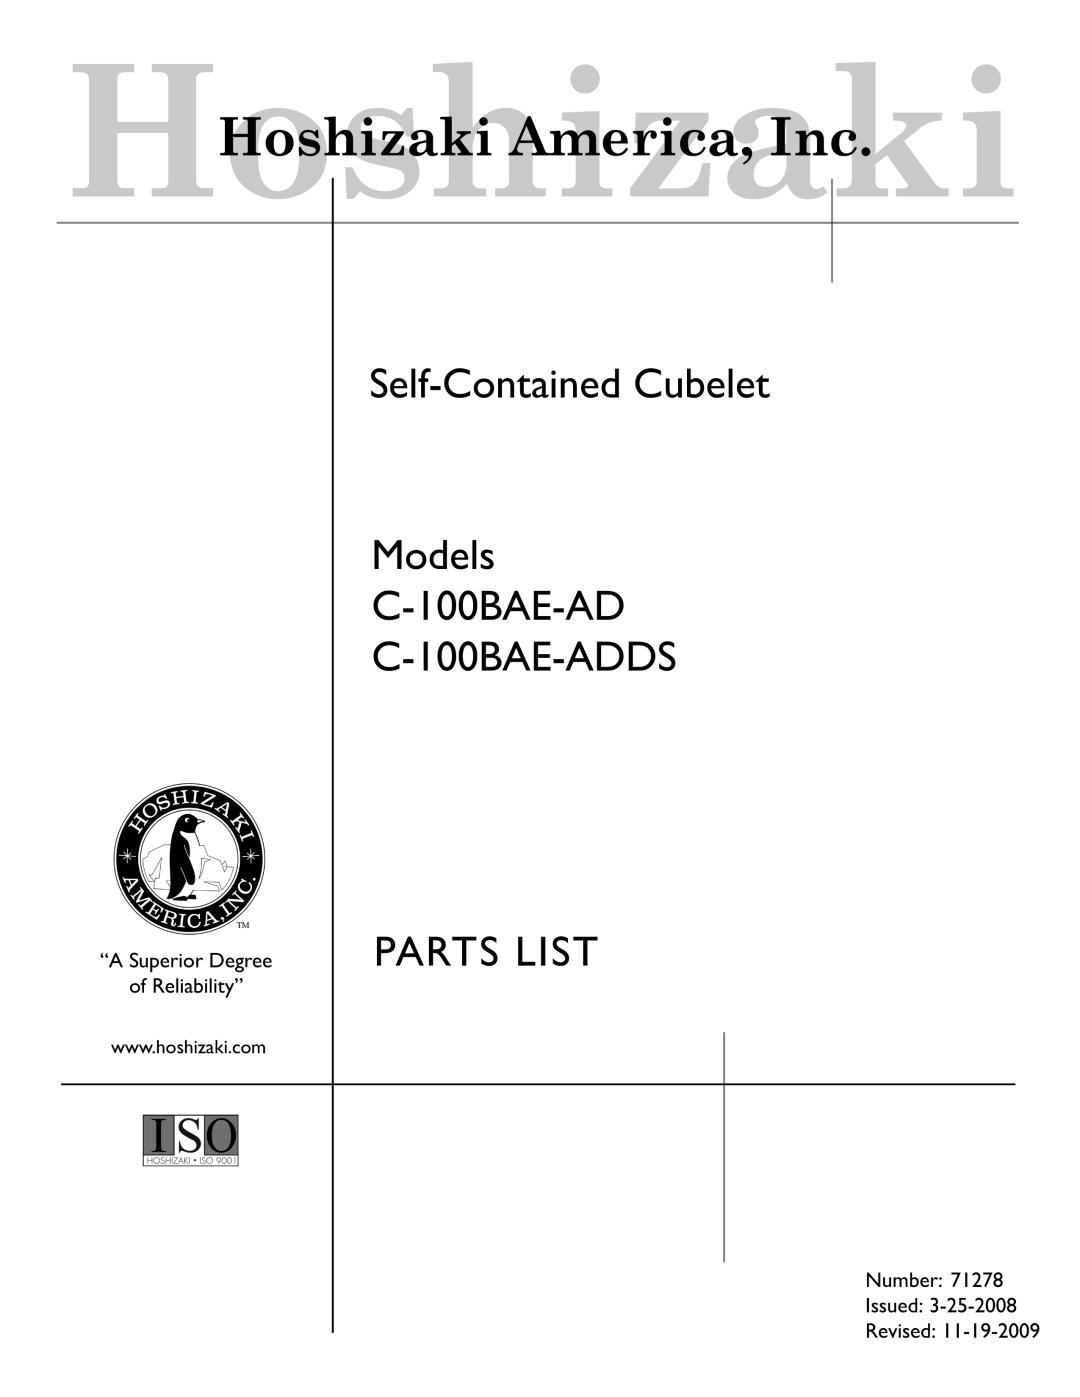 Hoshizaki manual Self-Contained Cubelet Models C-100BAE-AD C-100BAE-ADDS, Parts List, HoshizakiHoshizaki America, Inc 